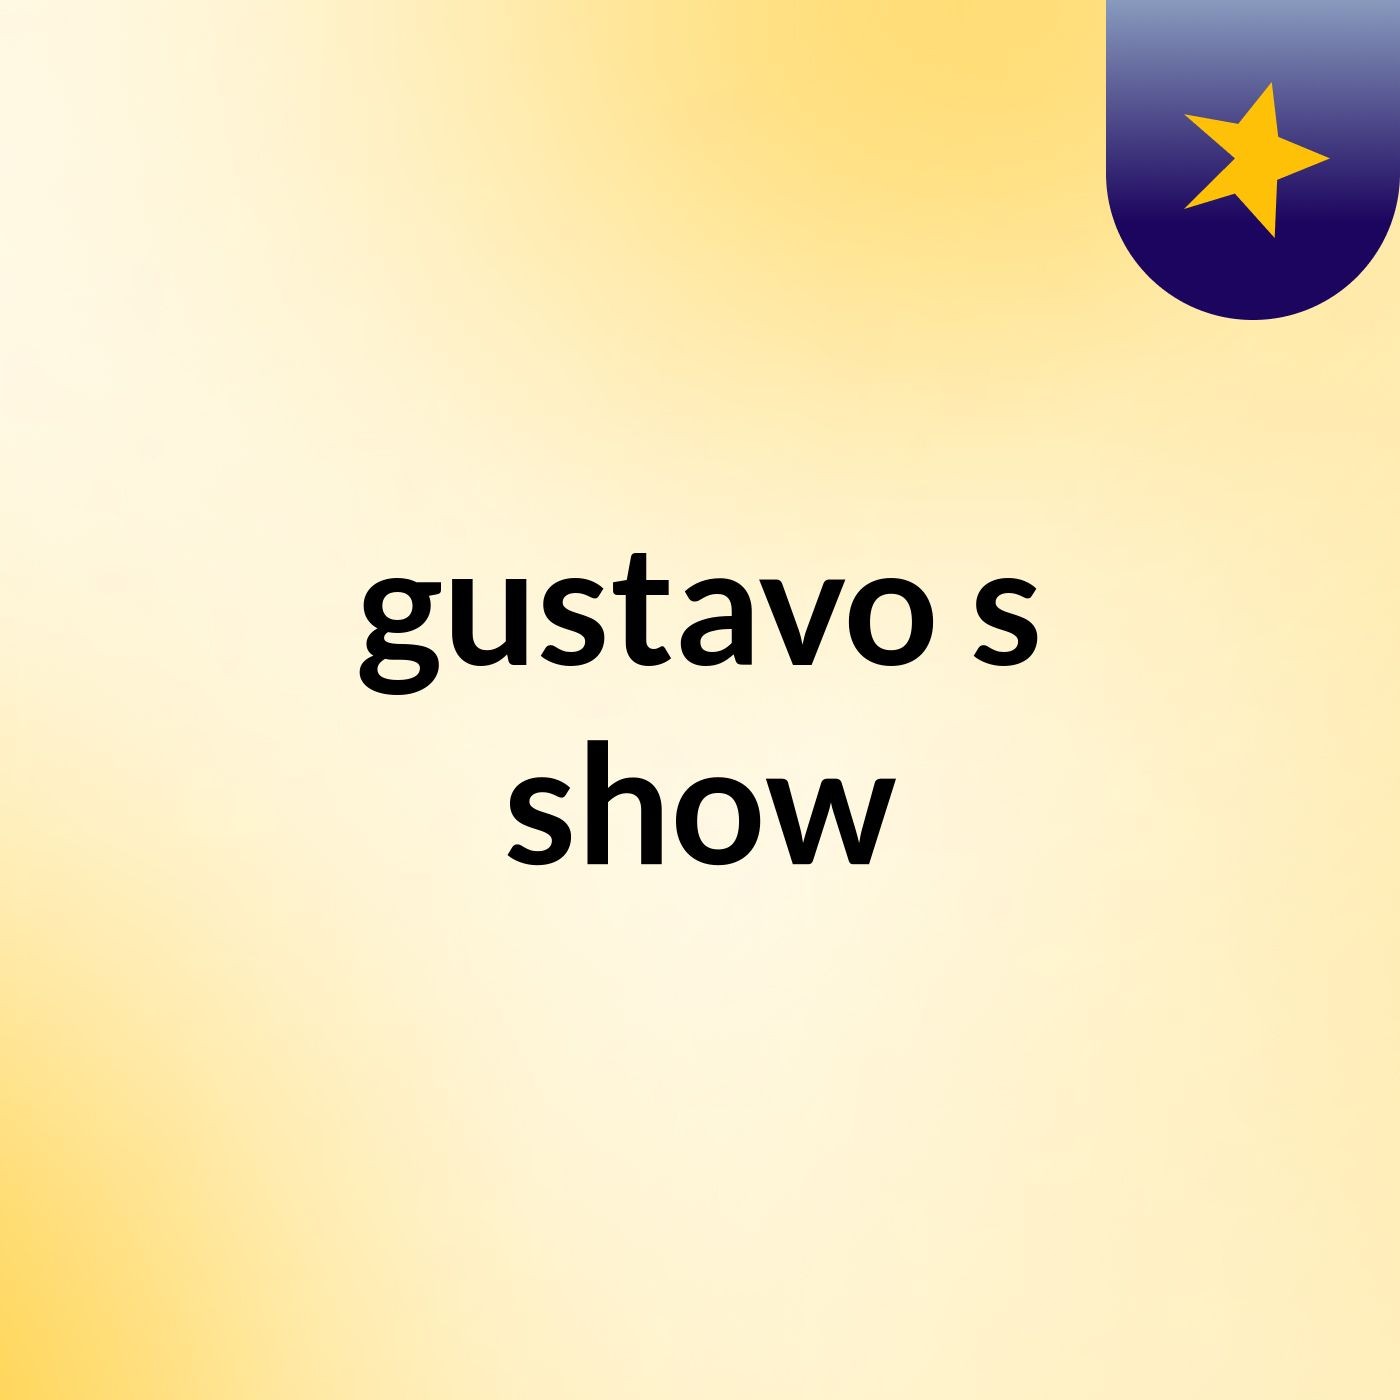 gustavo's show